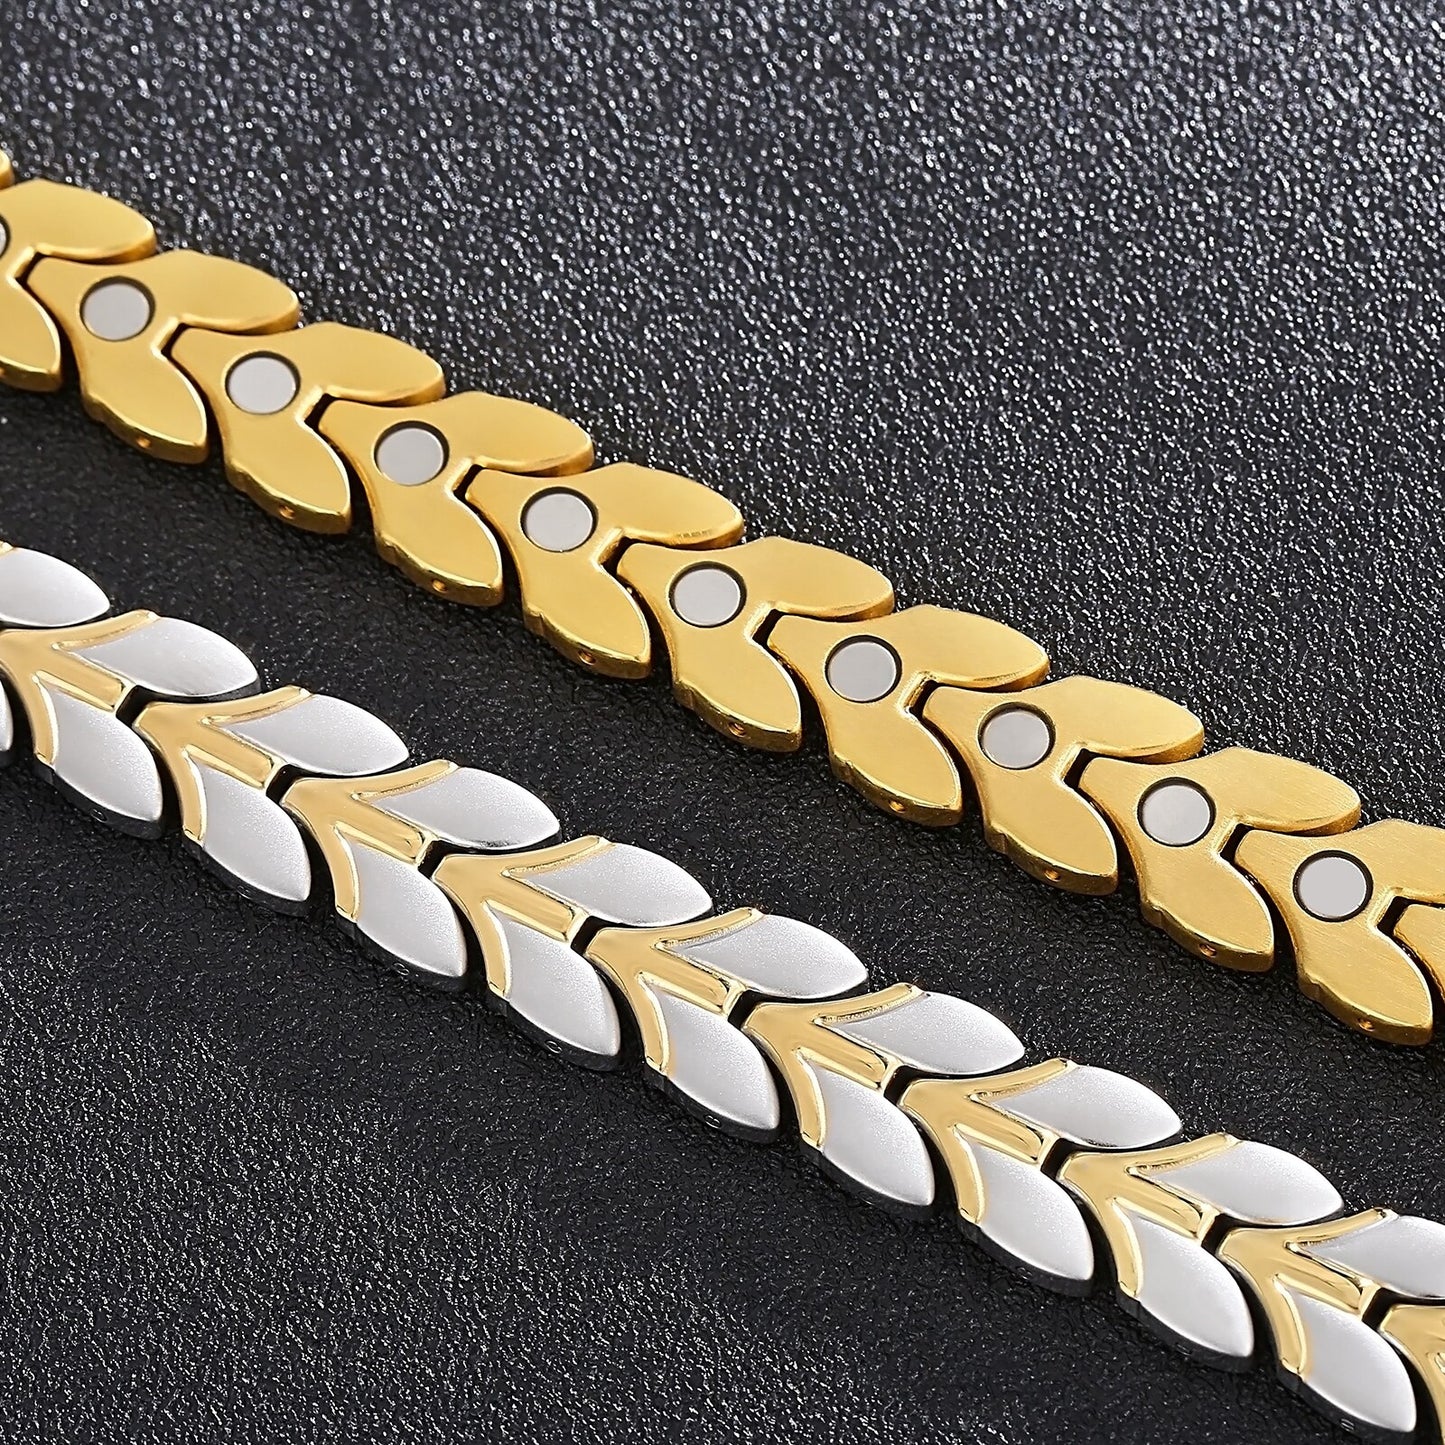 Magnetic Bracelets for Men Titanium Steel Therapy Health Chain Bracelet with Unique Line Charm Fashion Jewelry